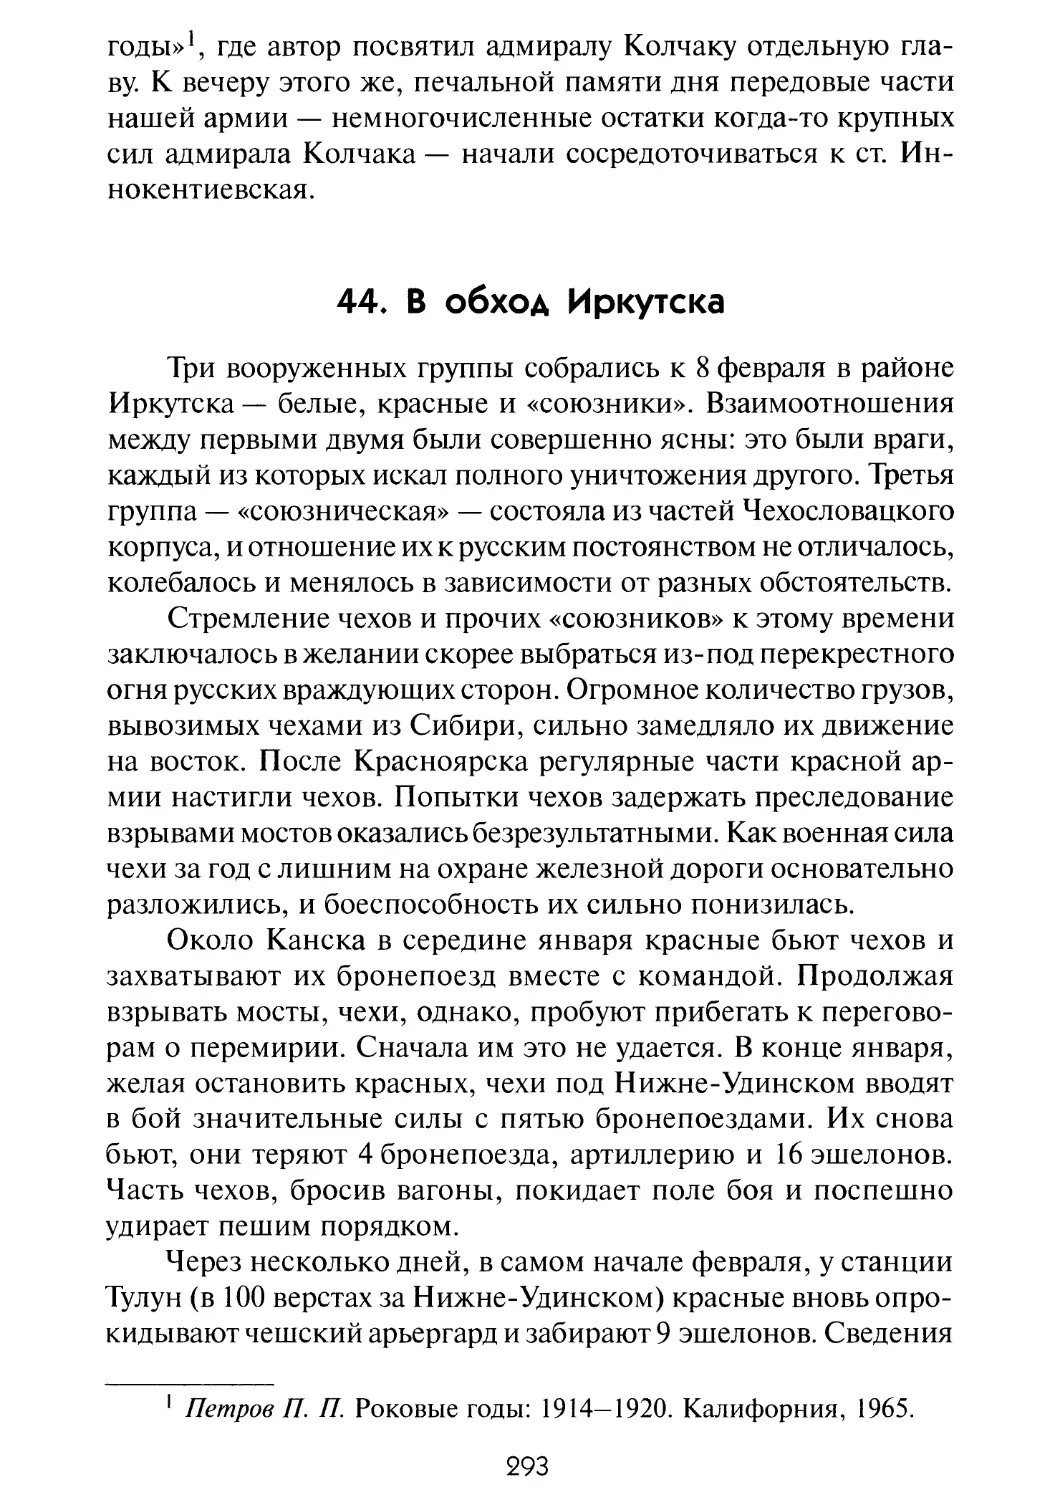 44. В обход Иркутска